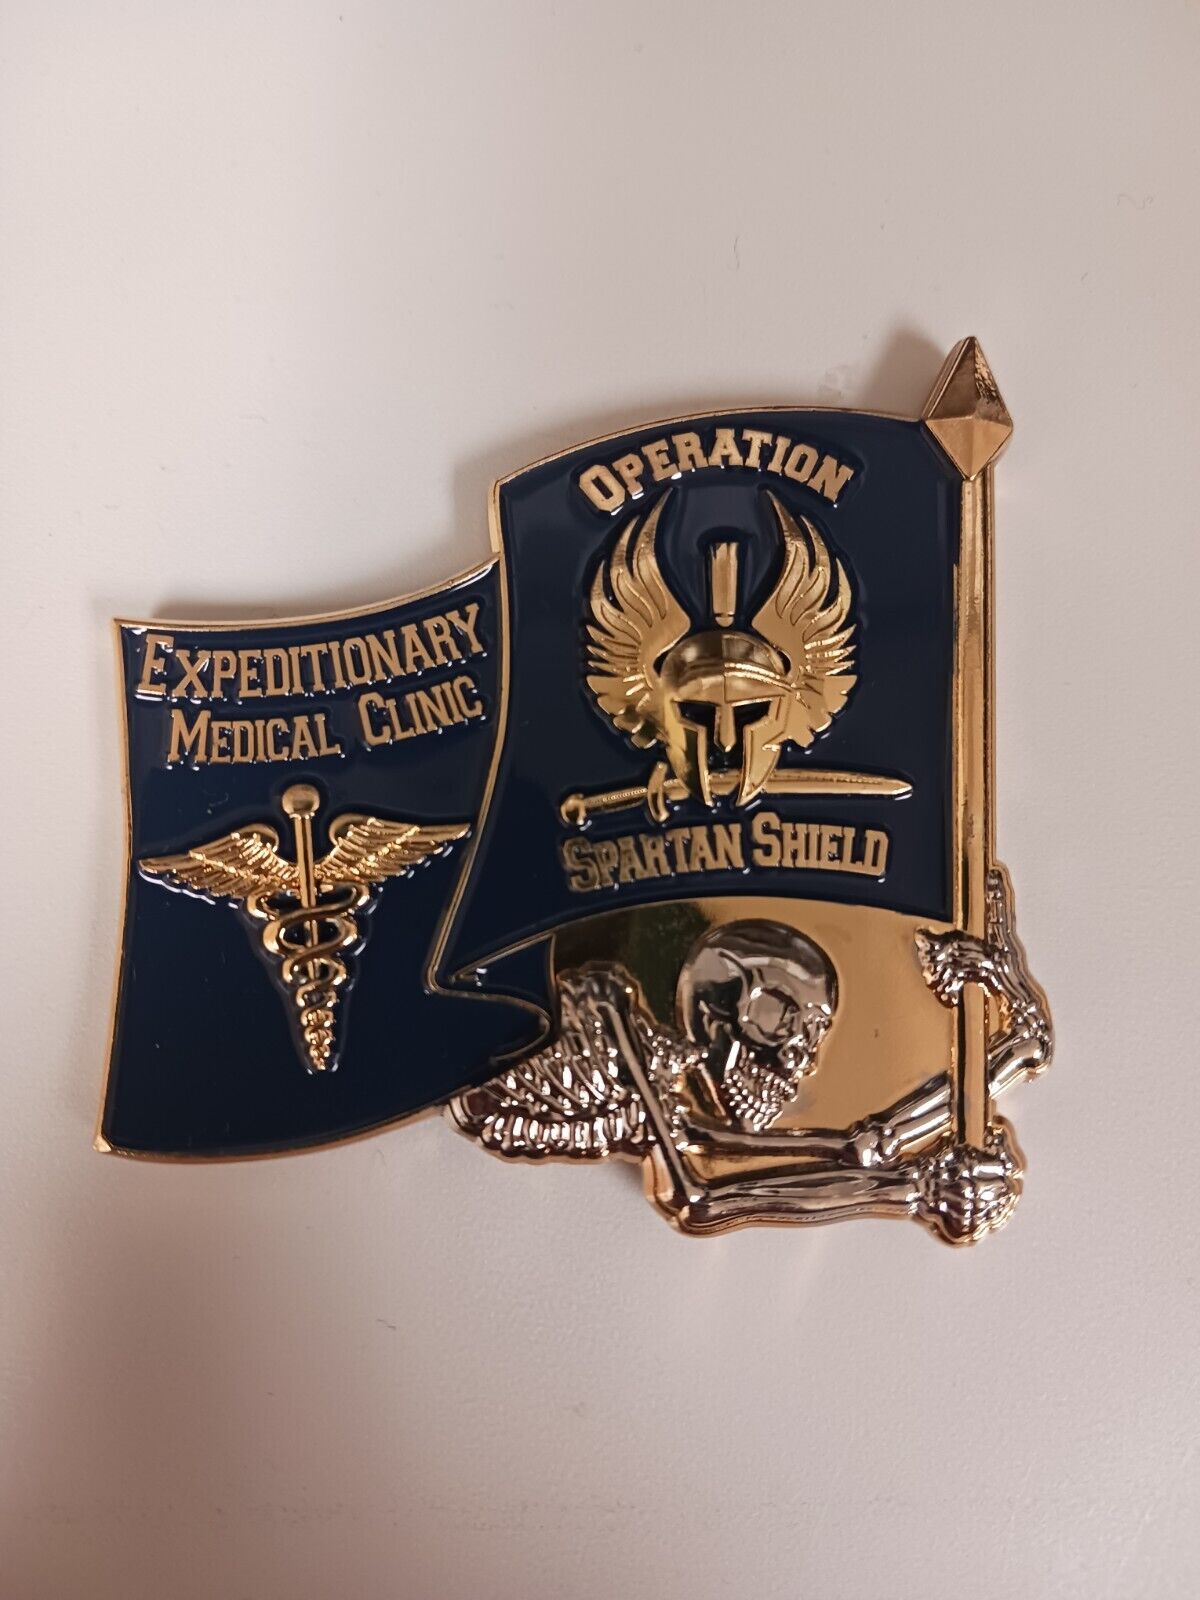 Expeditionary Medical Clinic Isa Air Base Bahrain Coin 2019 Spartan Shield